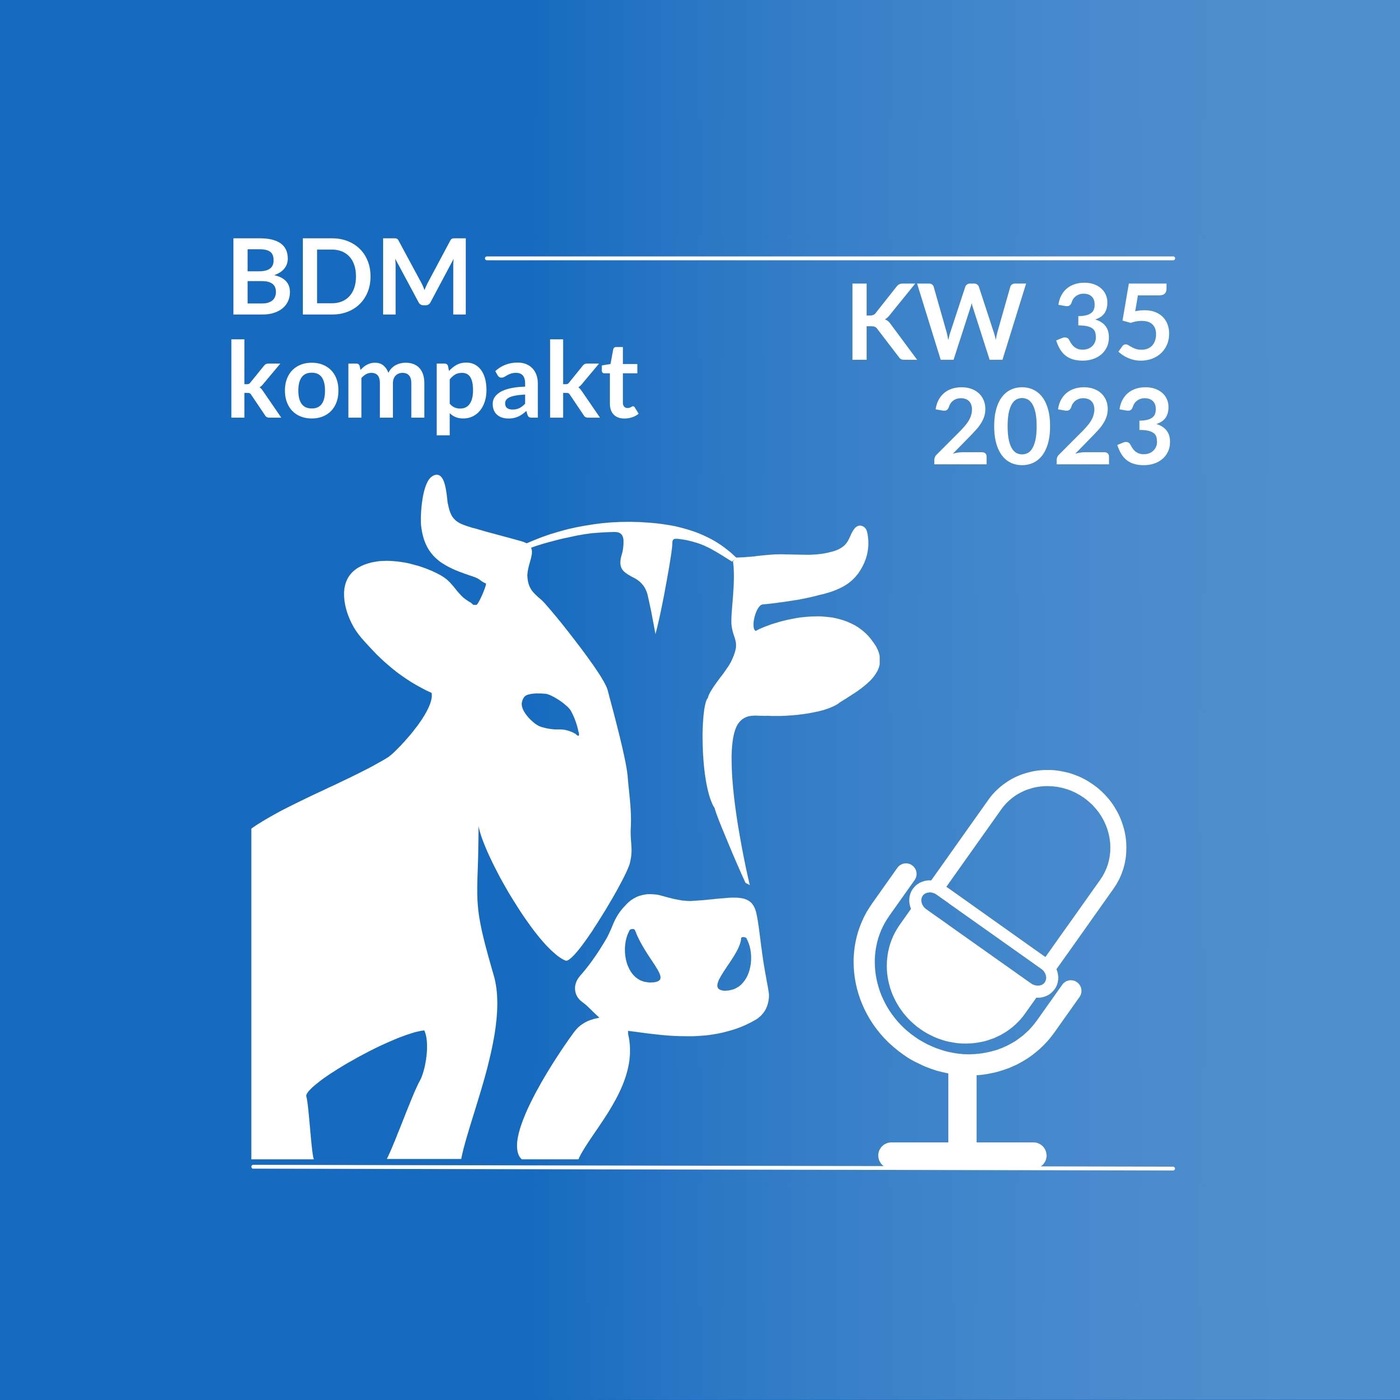 BDM kompakt KW 35/2023